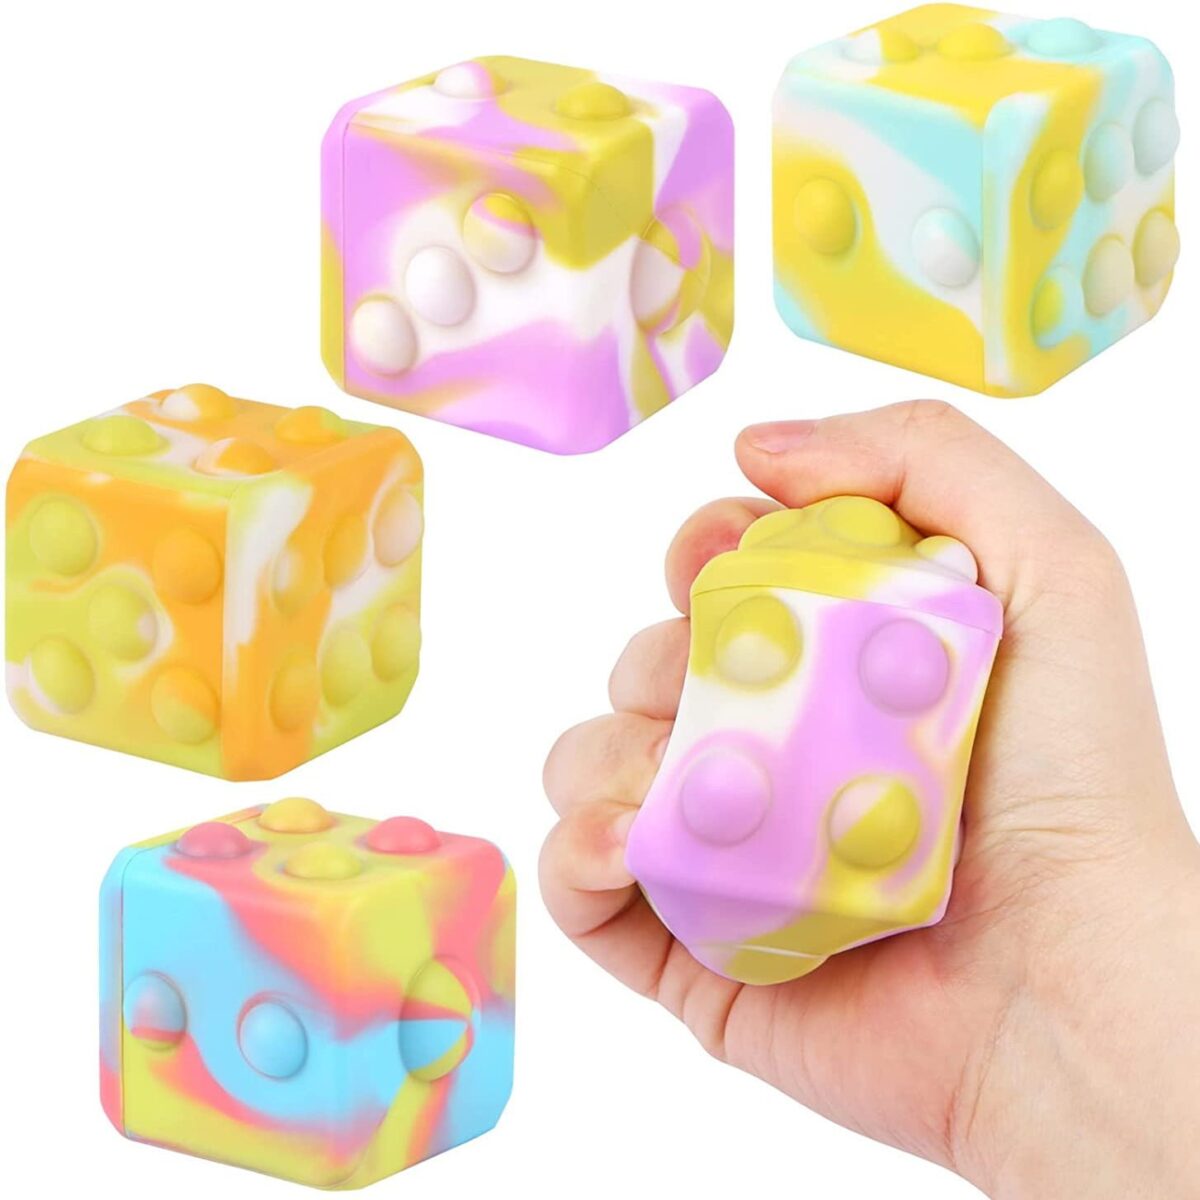 3D Pop Its Ball Cube Fidget Toy